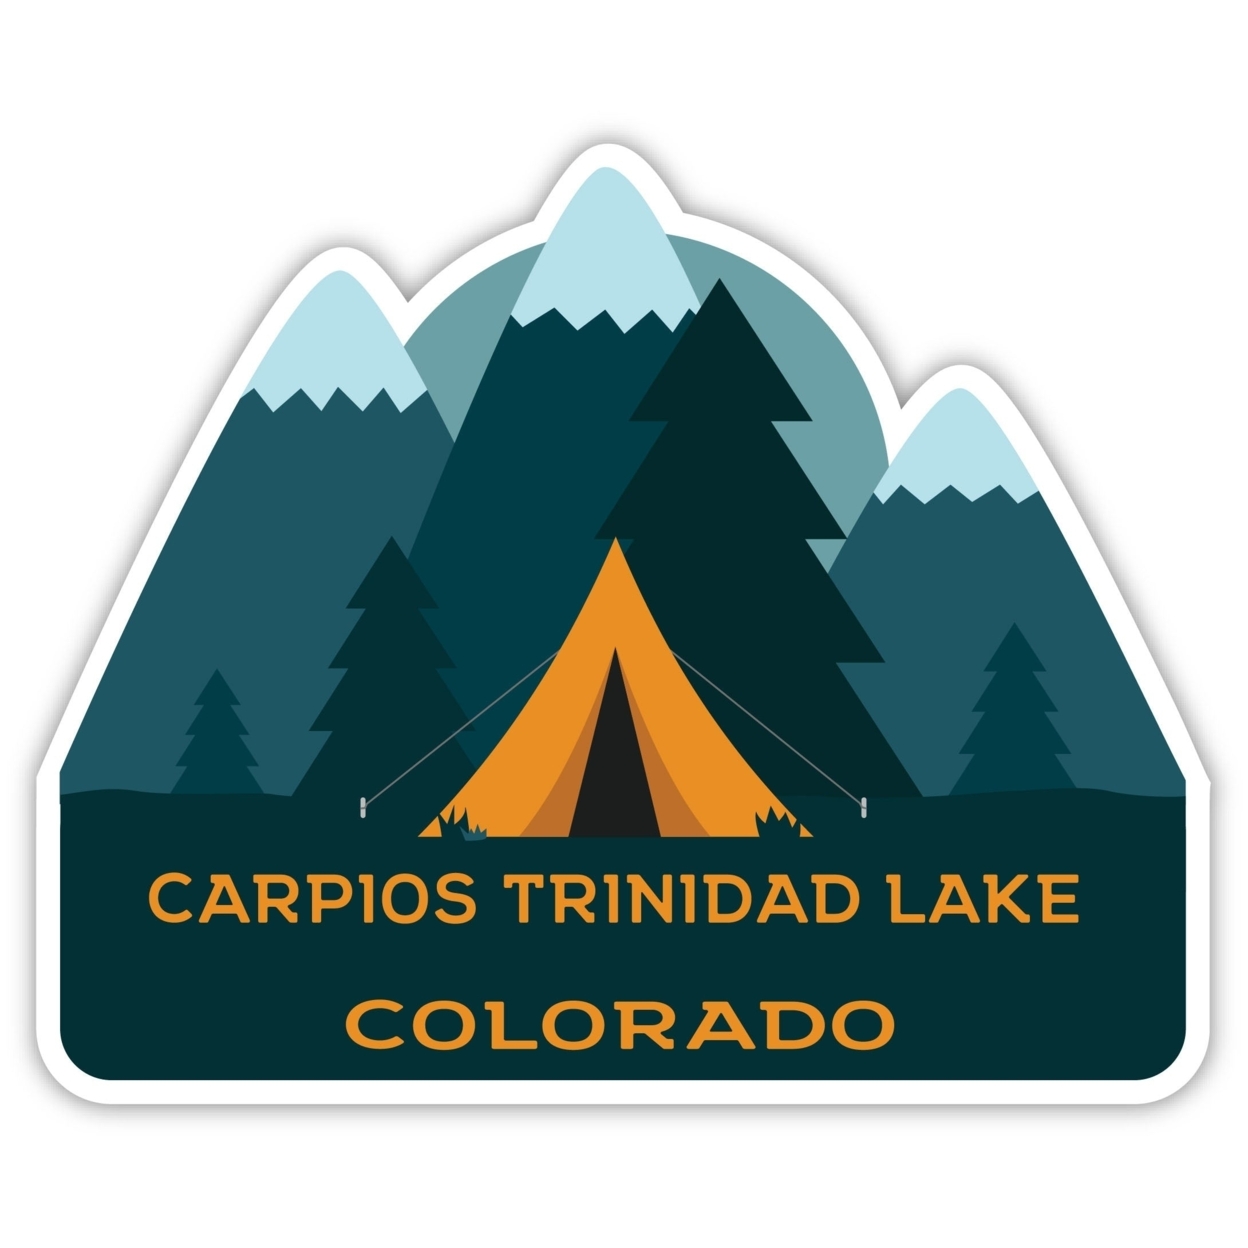 Carpios Trinidad Lake Colorado Souvenir Decorative Stickers (Choose Theme And Size) - Single Unit, 6-Inch, Bear